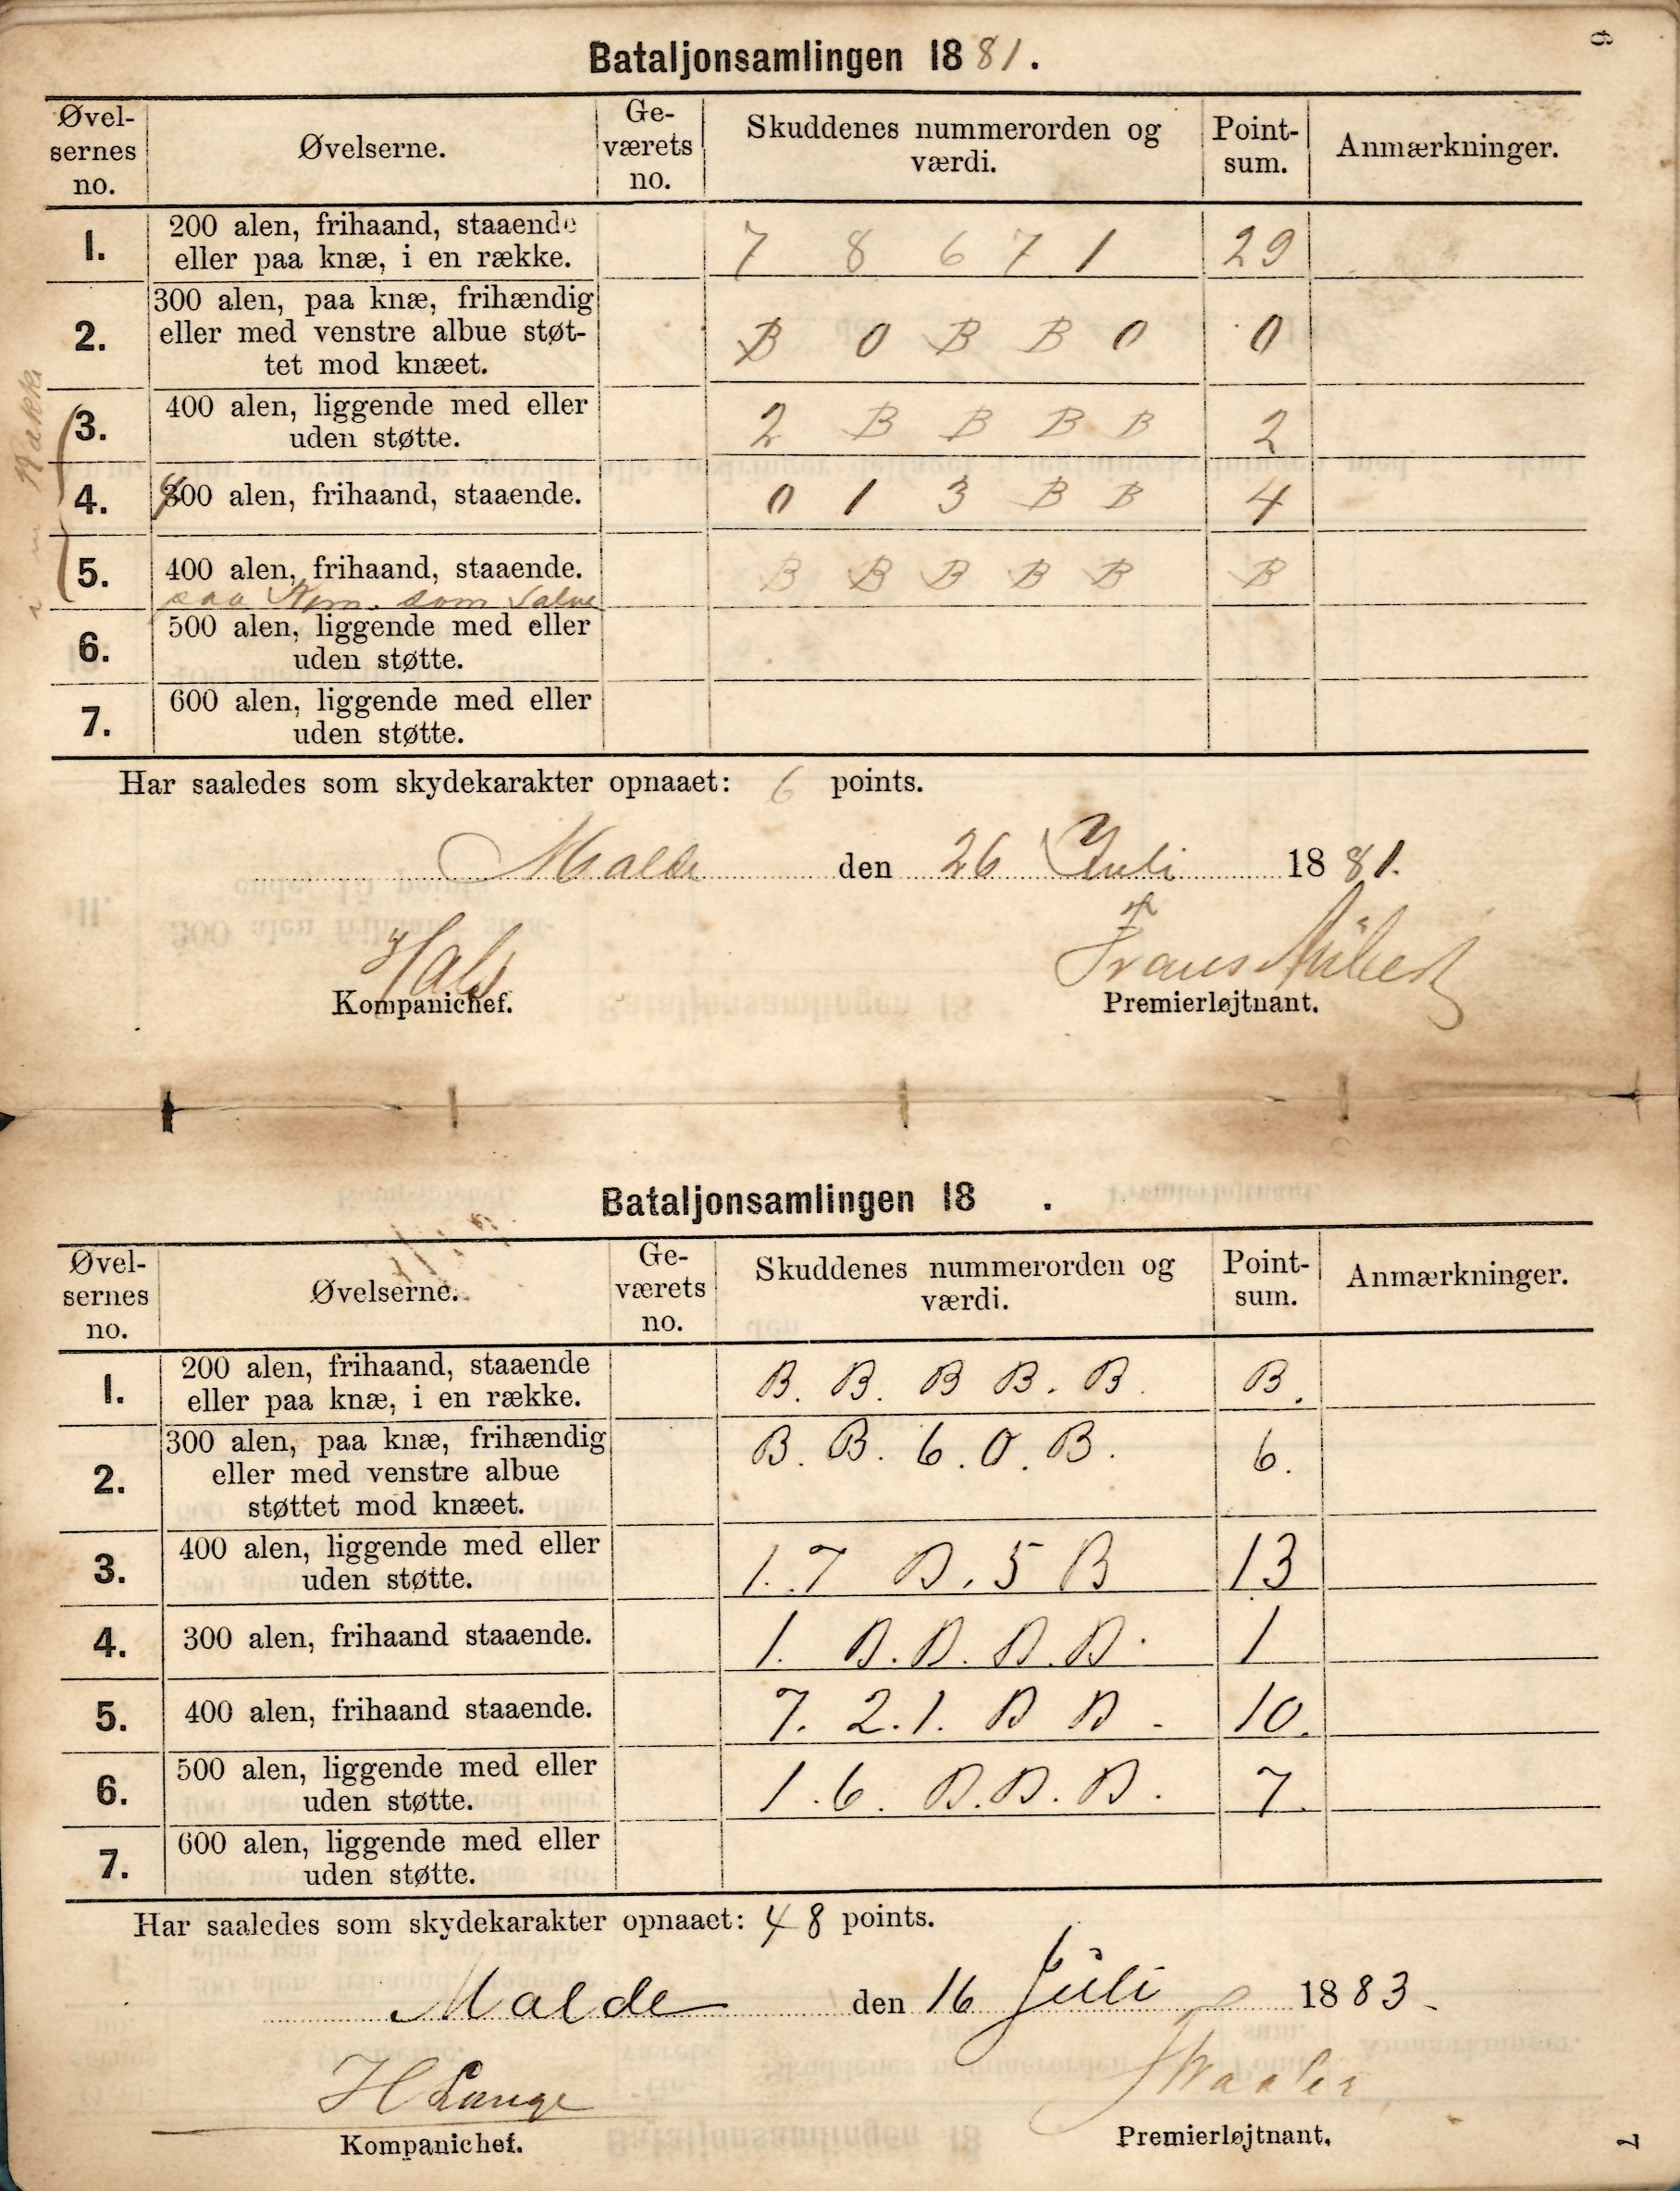 ./doc/reglement/Infanteri1881/Haandbog-Infanteri-1881-24.jpg